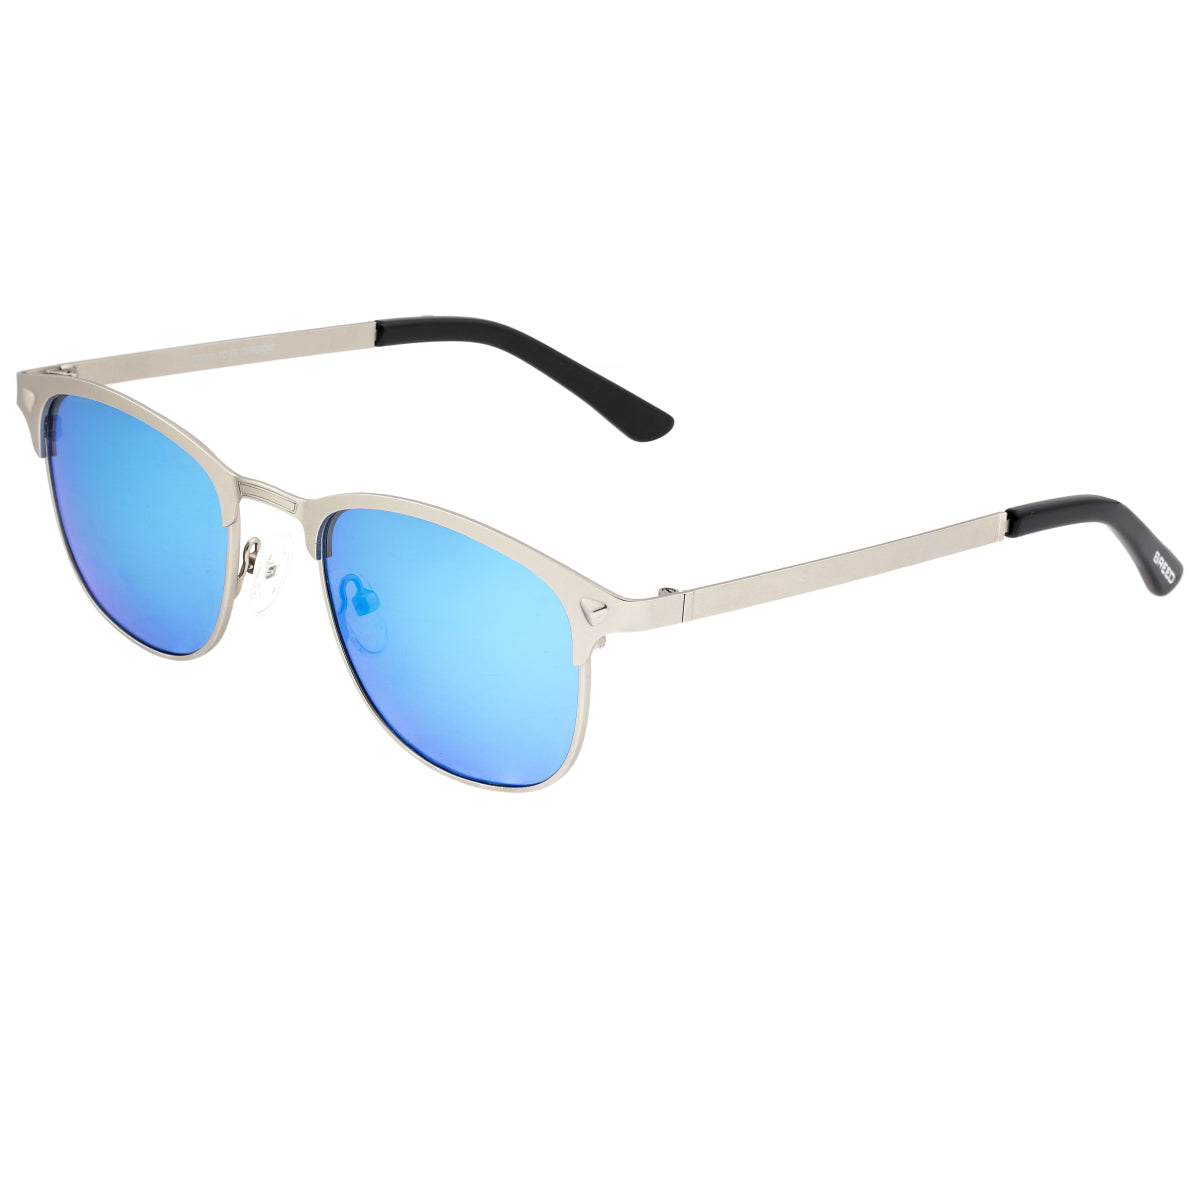 Breed Phase Titanium Polarized Sunglasses - Silver/Celeste - BSG058SL